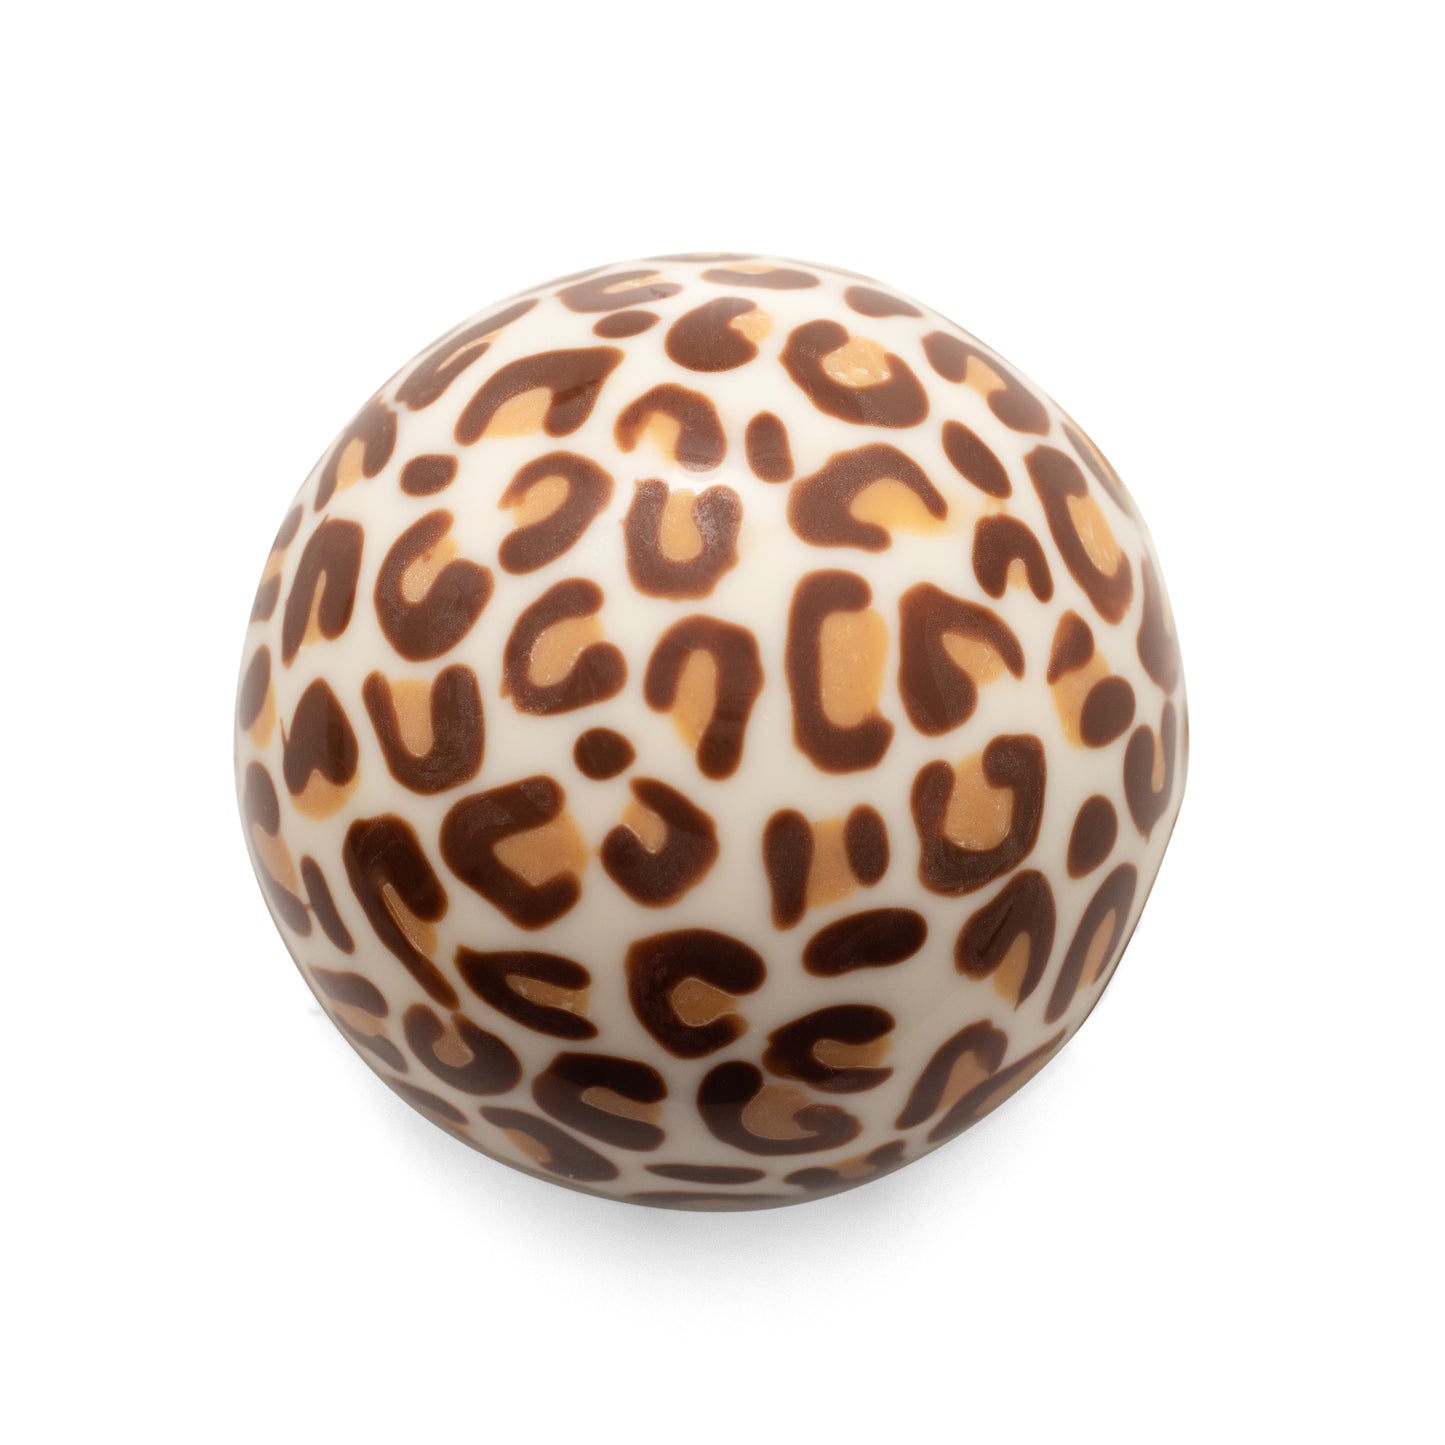 Kaboom Chocolaka Mini Mold-Ball